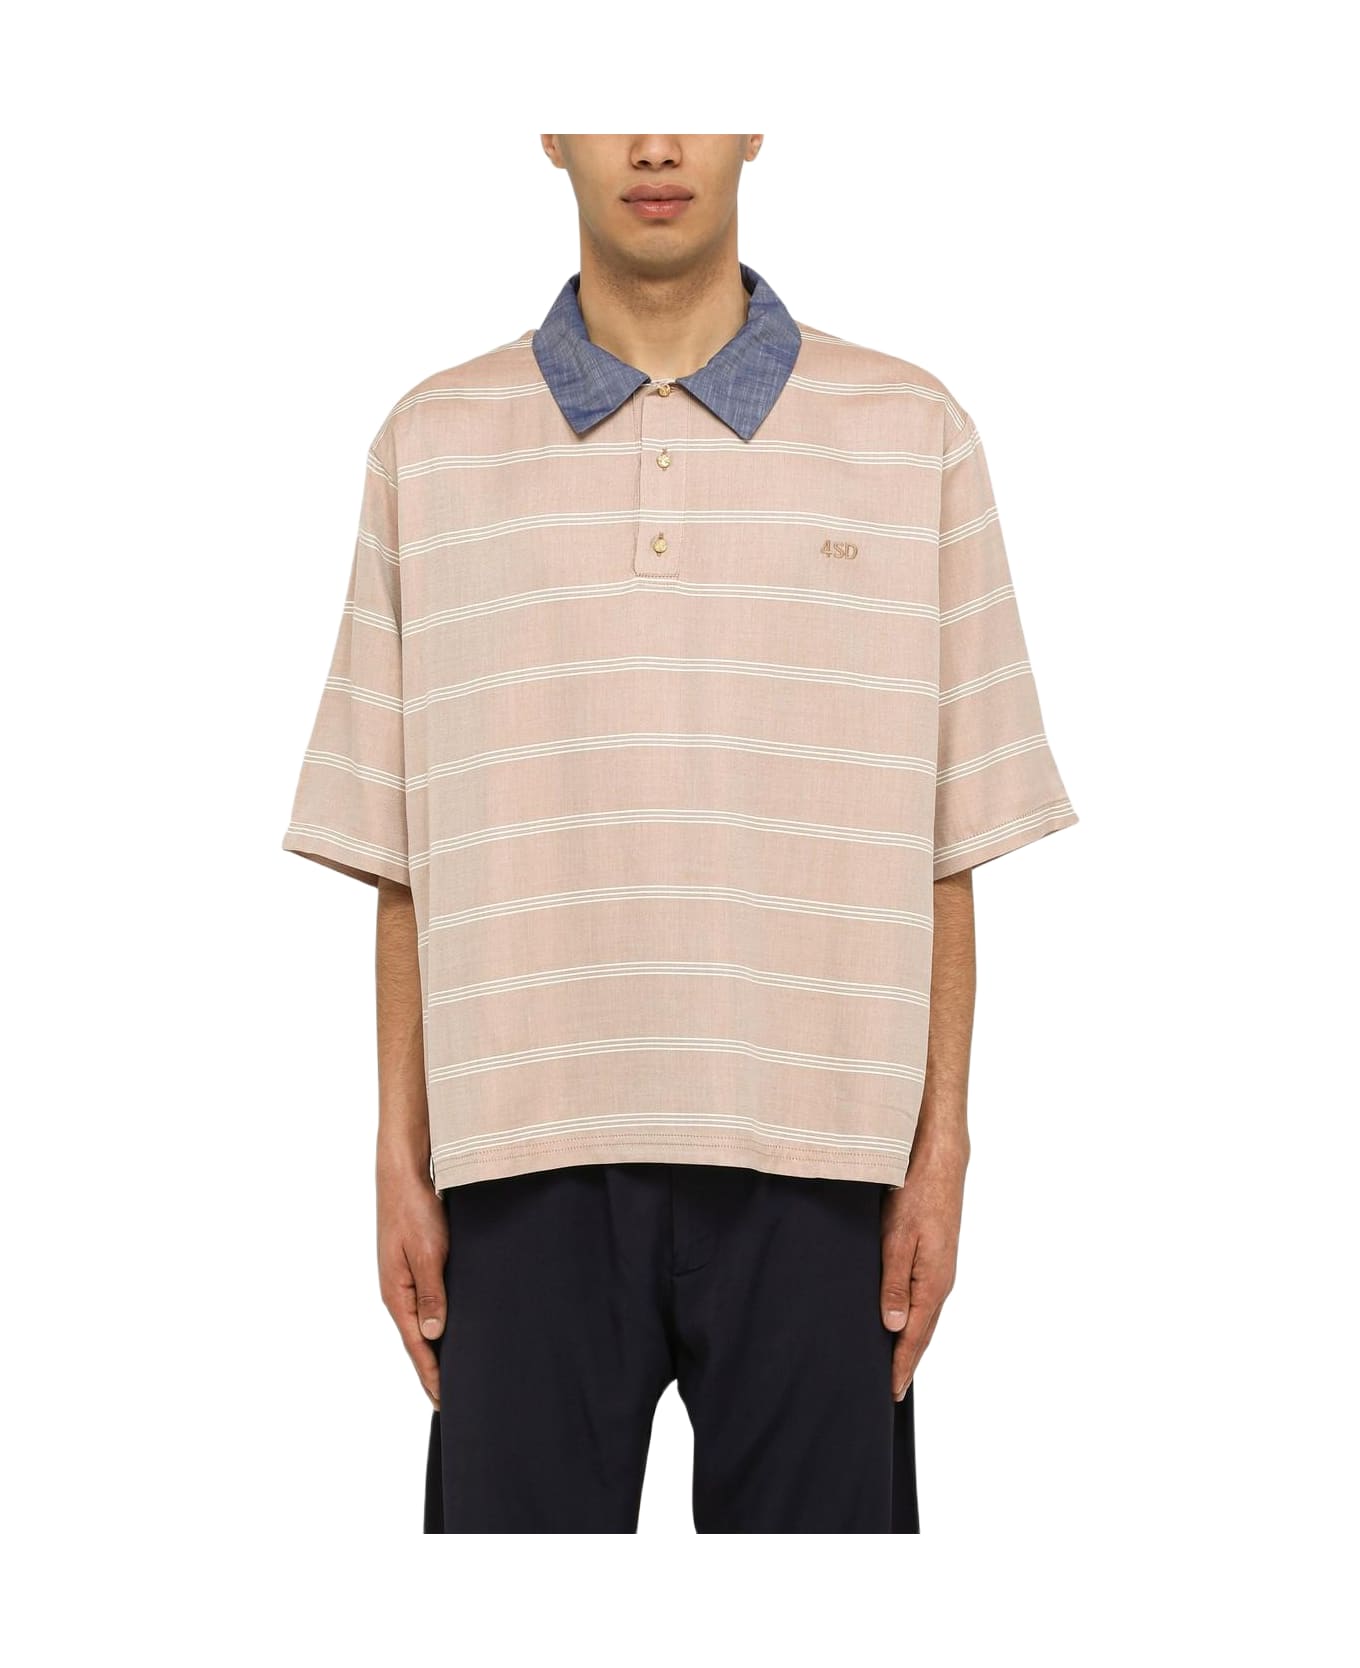 4sdesigns Striped Khaki Oversize Polo Shirt - BEIGE